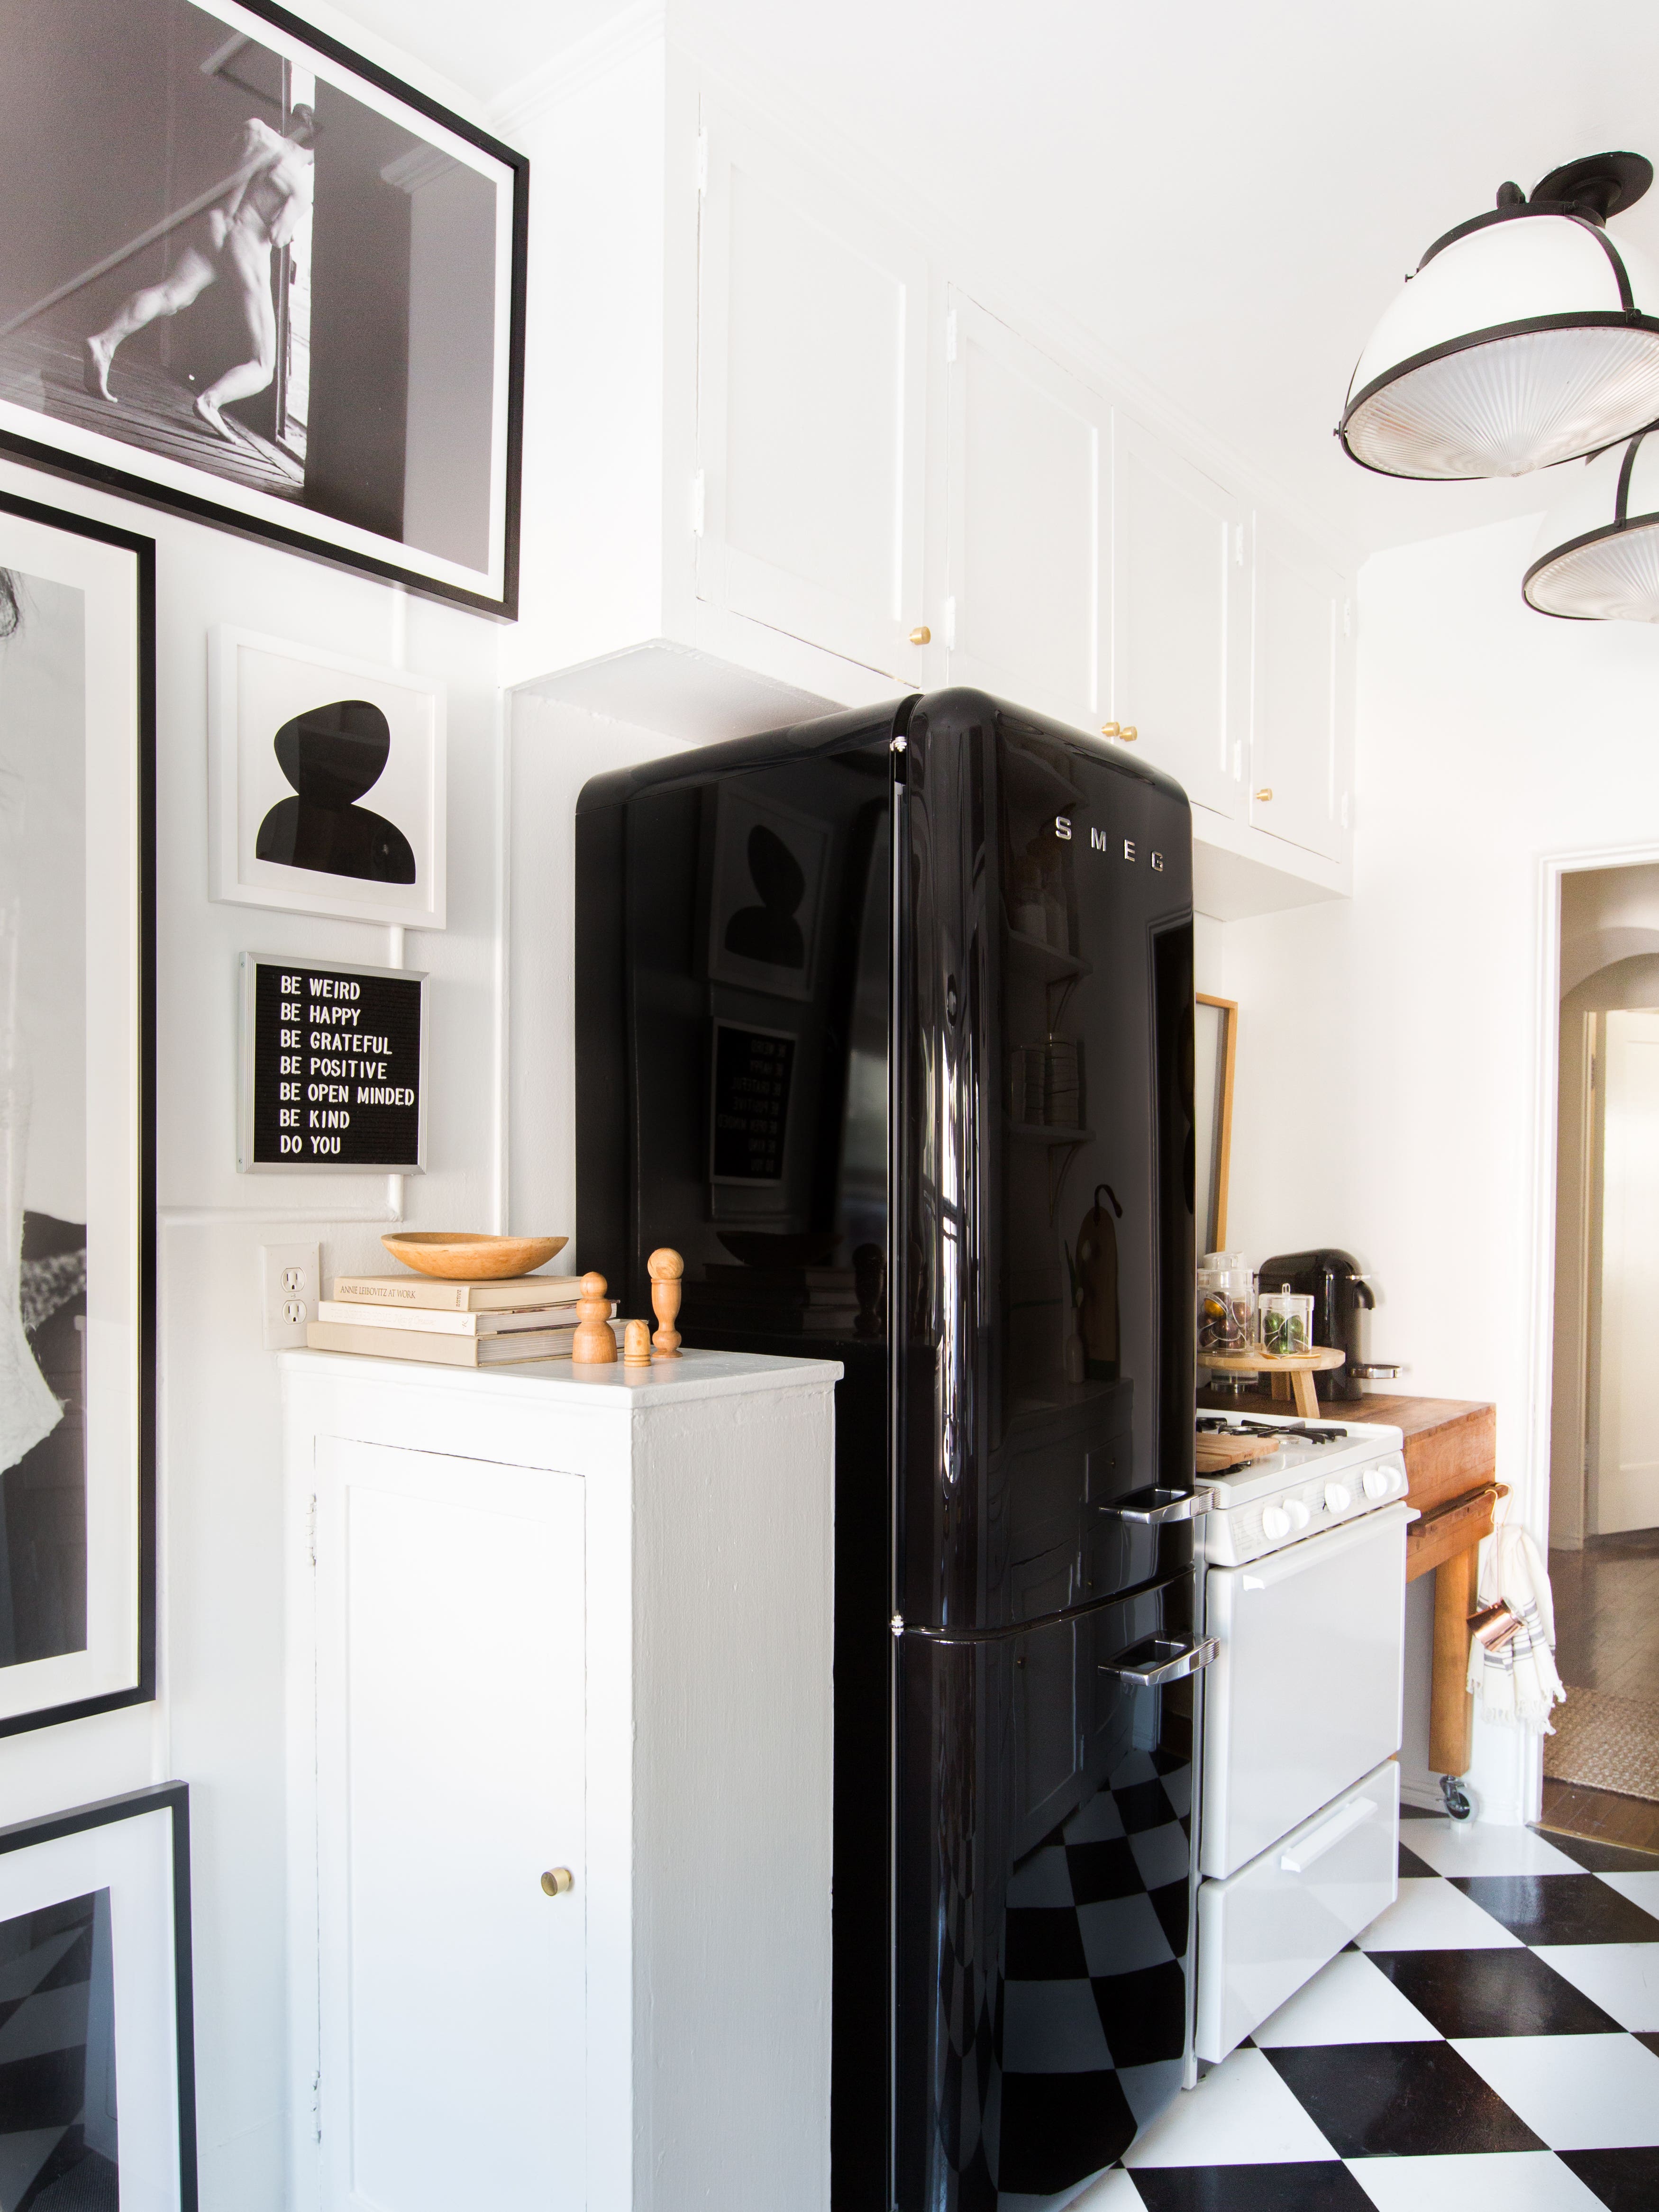 black fridge with balck and white checkered floors